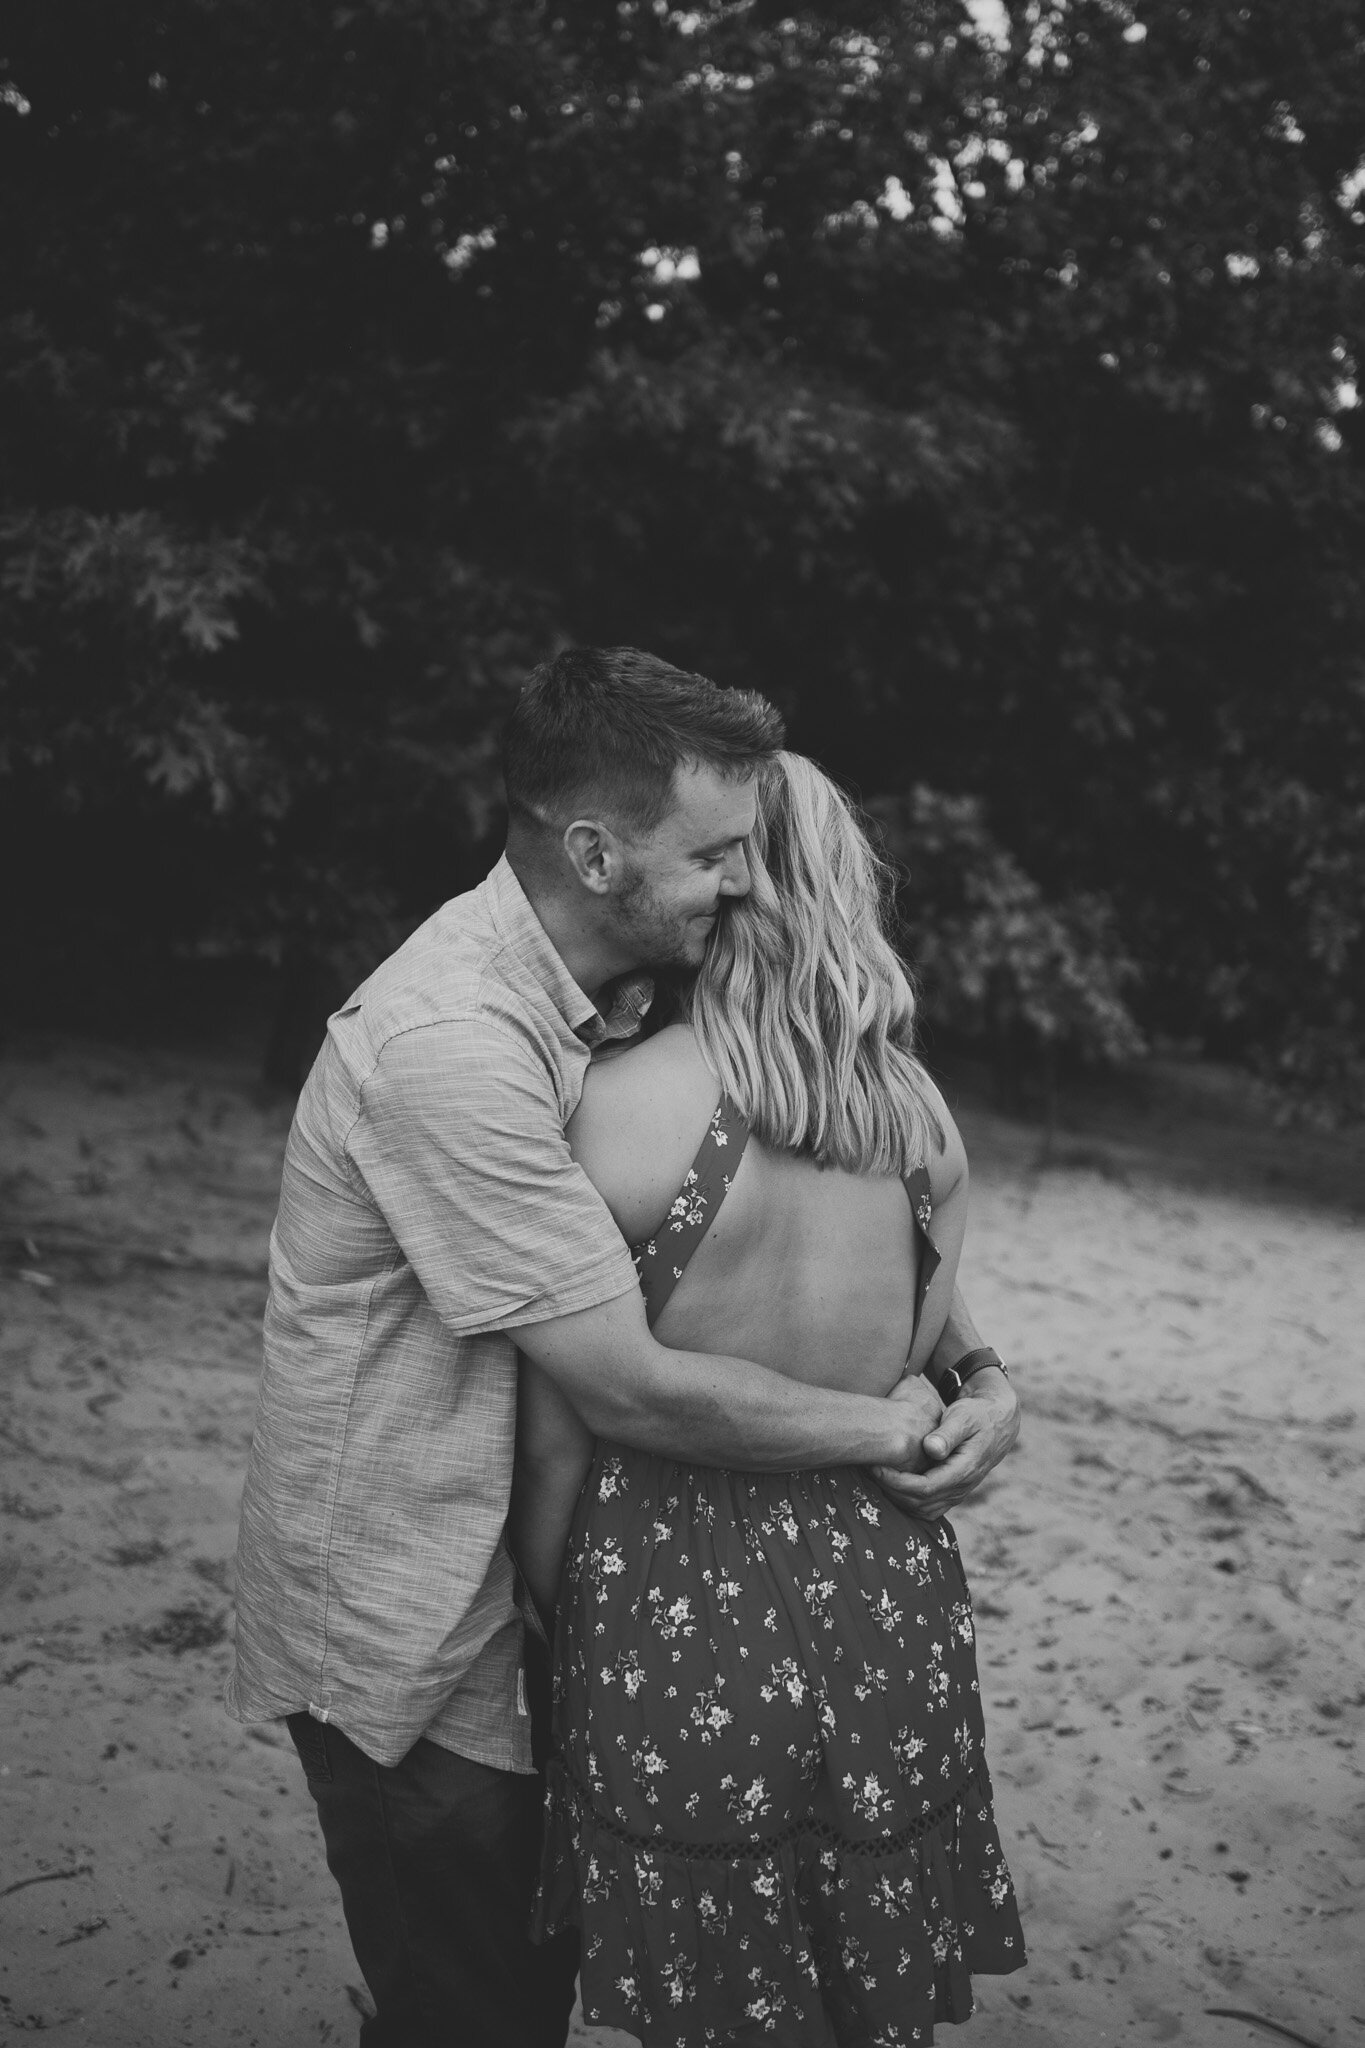 Chris and Kaleen Summer 2020 - Provin Trails - Grand Rapids Wedding Photographer - West Michigan Wedding Photographer - J Darling Photo 015.jpg